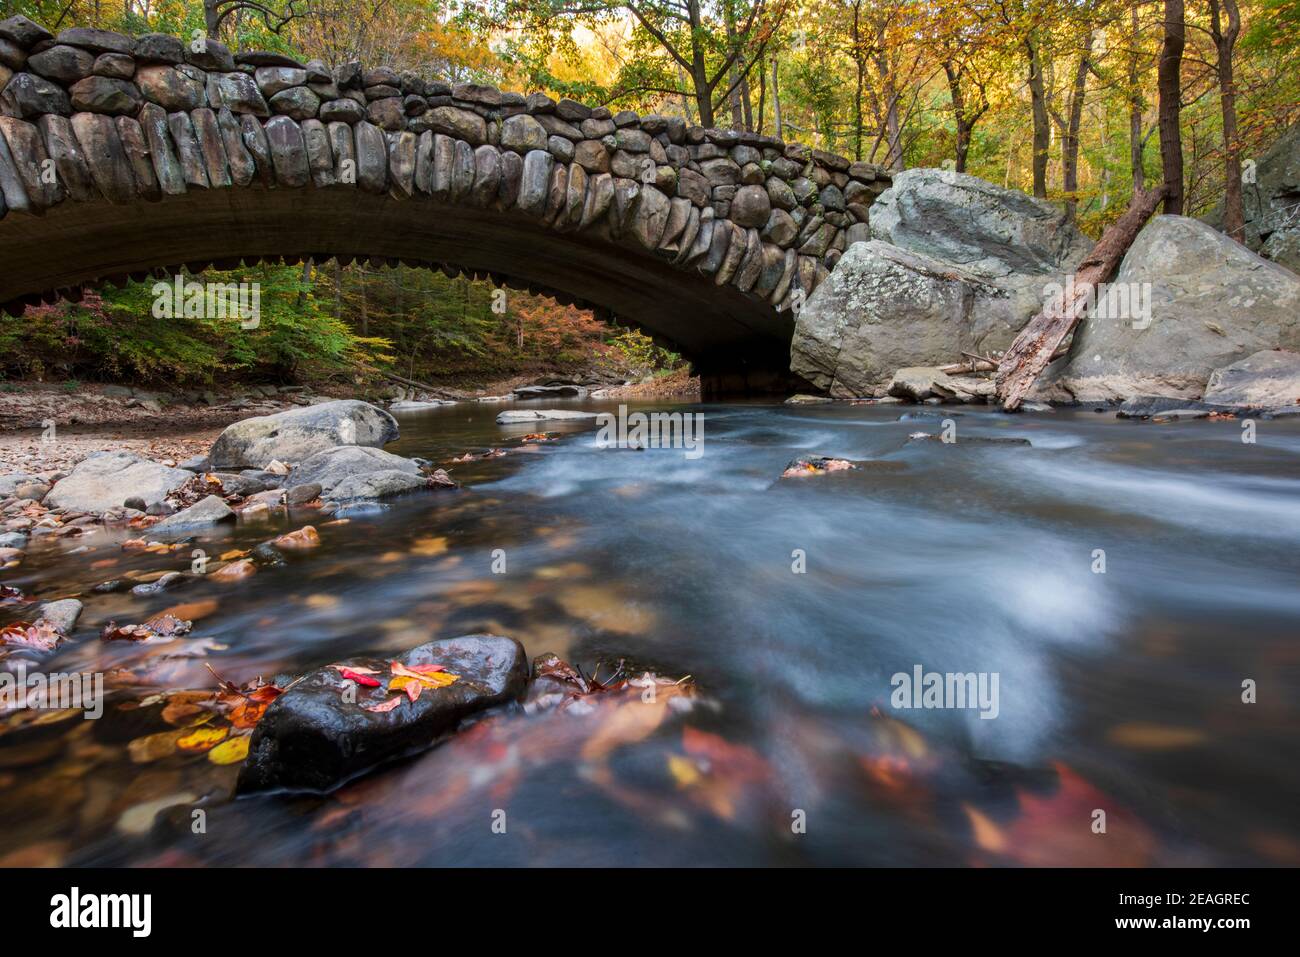 Fall foliage frames Boulder Bridge in Rock Creek Park, Washington, DC in Autumn. Stock Photo